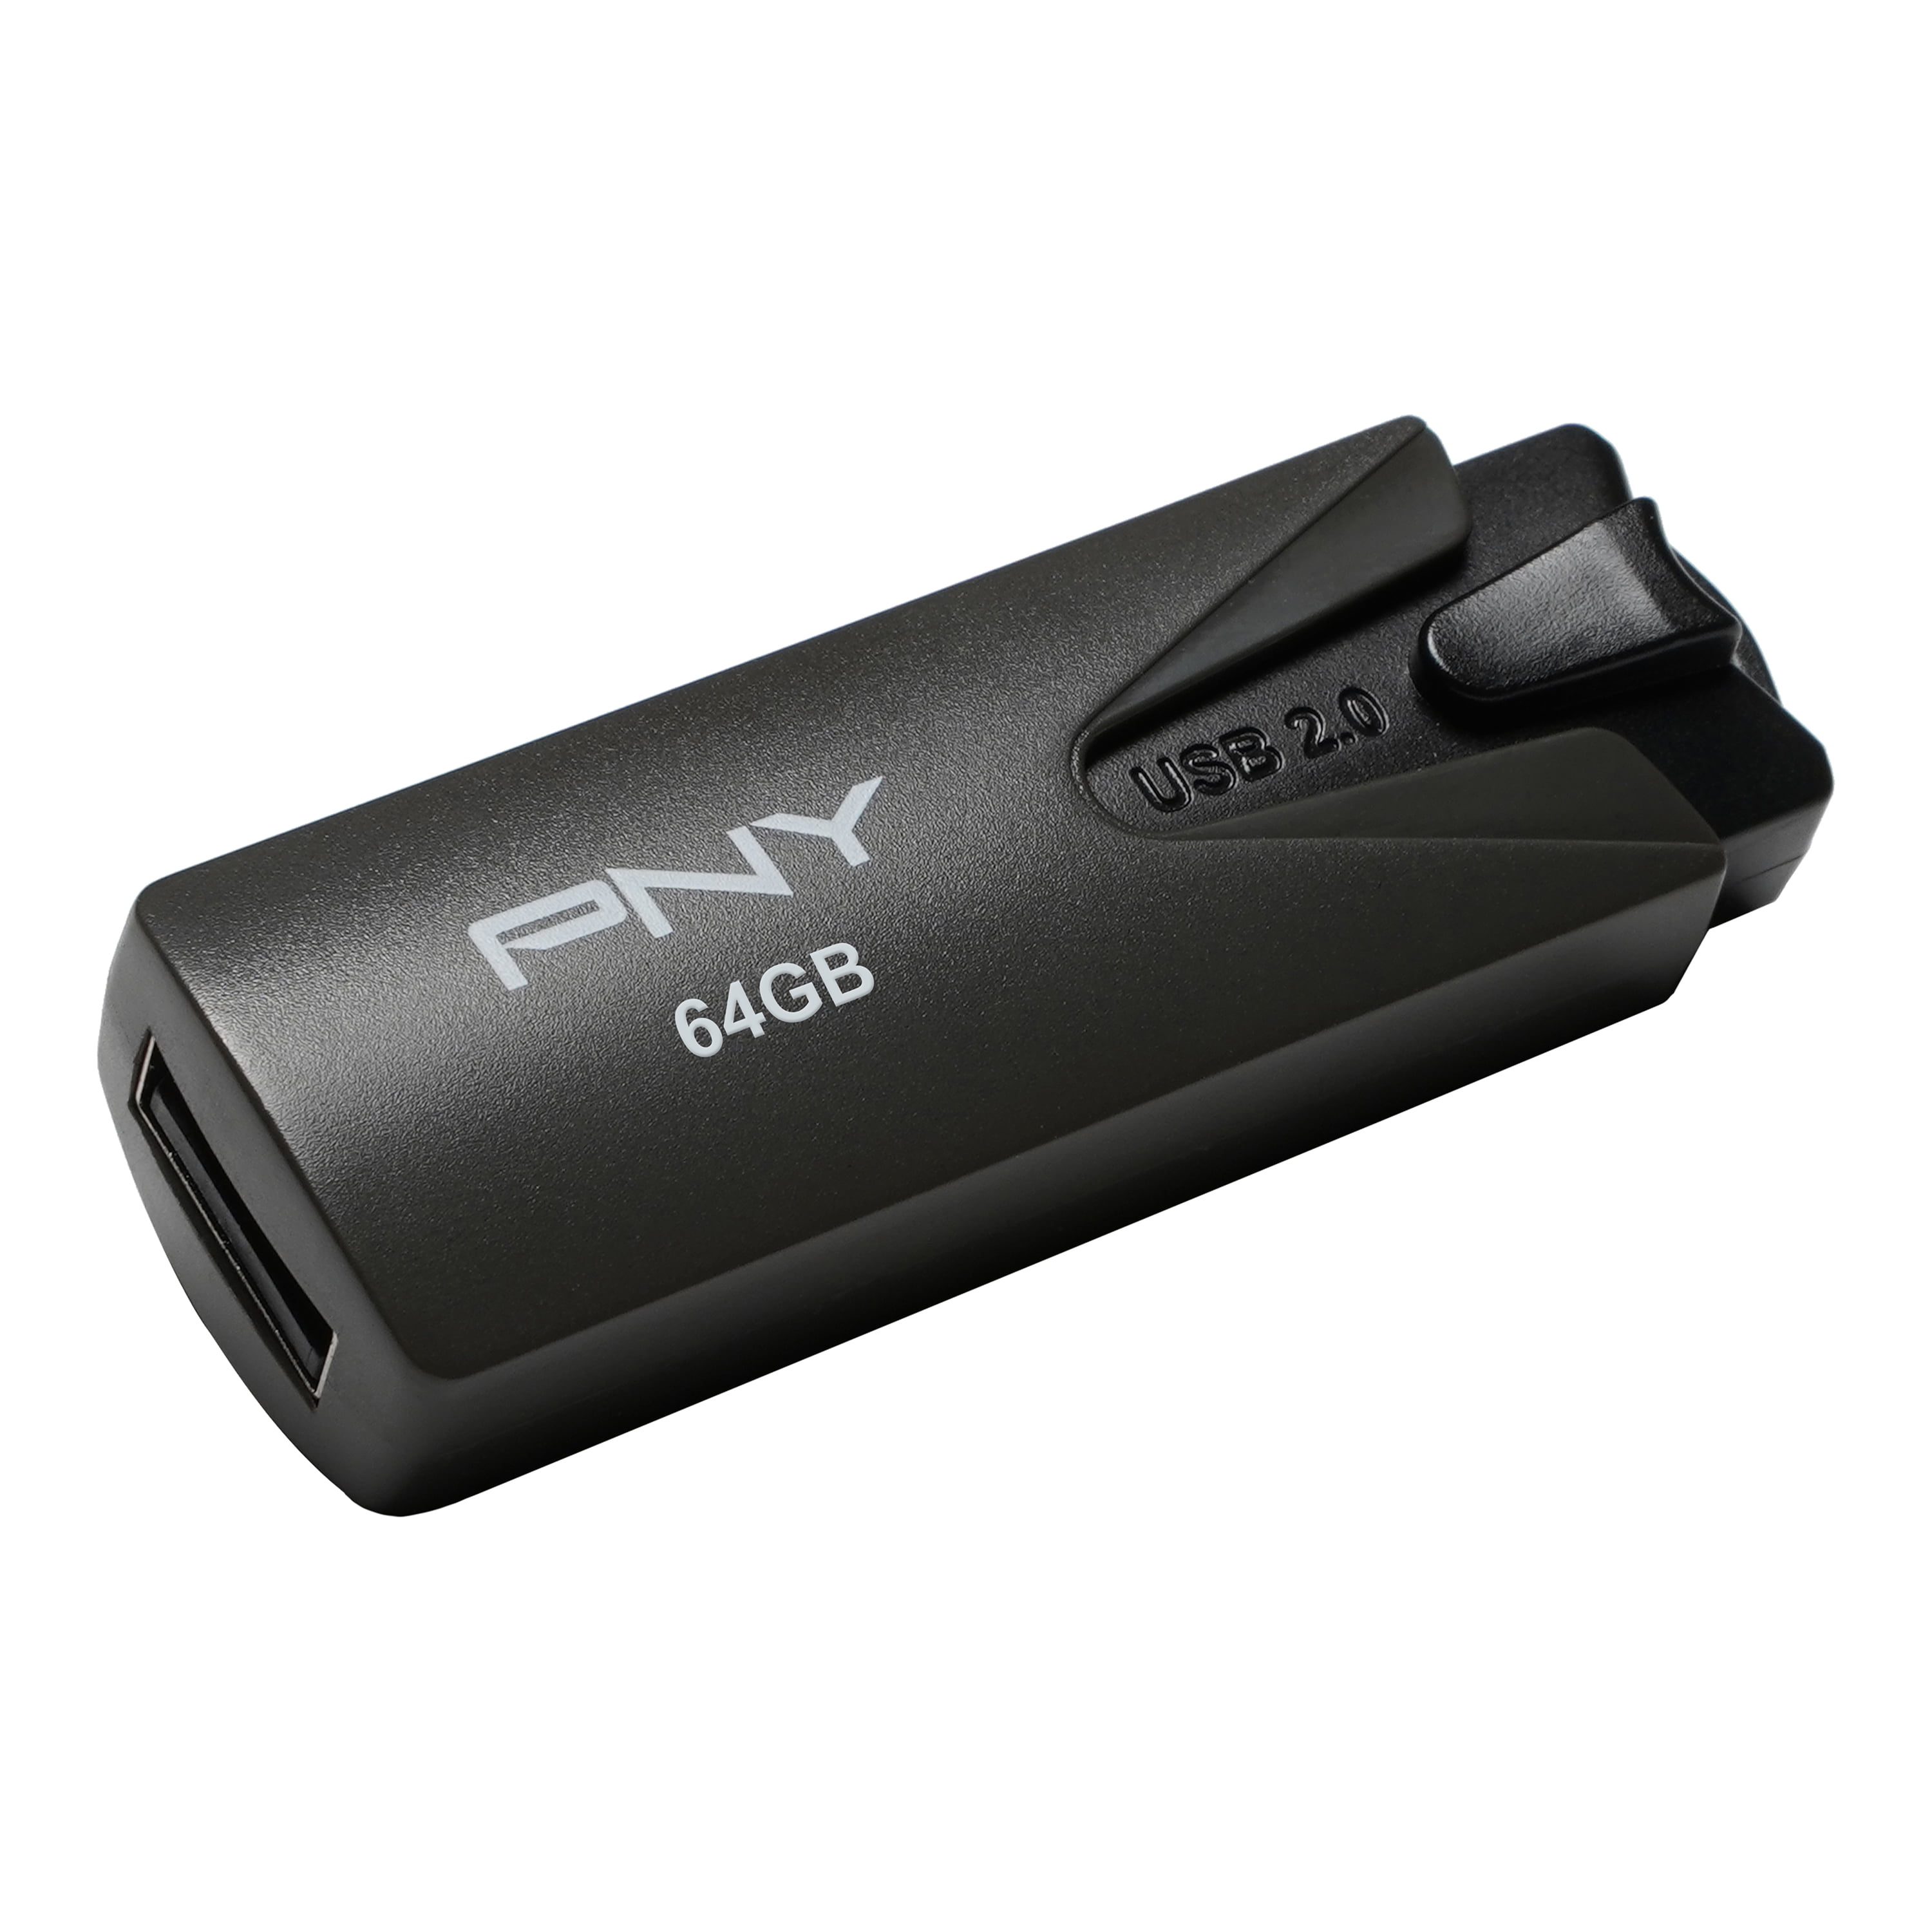 PNY Attache USB 2.0 Flash Drive - Walmart.com